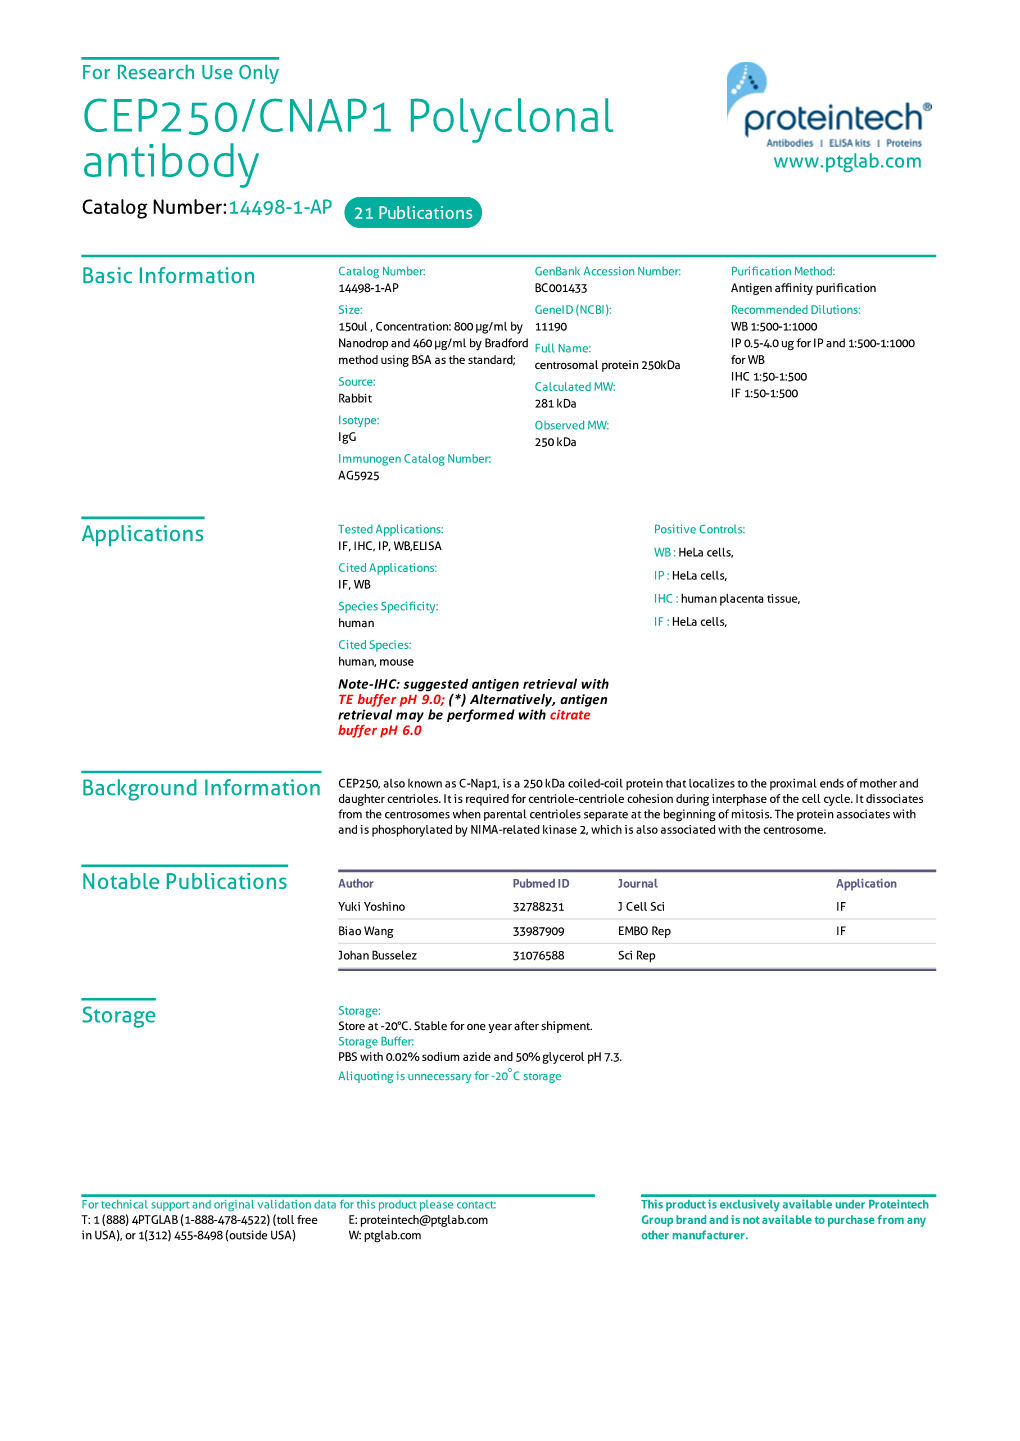 CEP250/CNAP1 Polyclonal Antibody Catalog Number:14498-1-AP 21 Publications